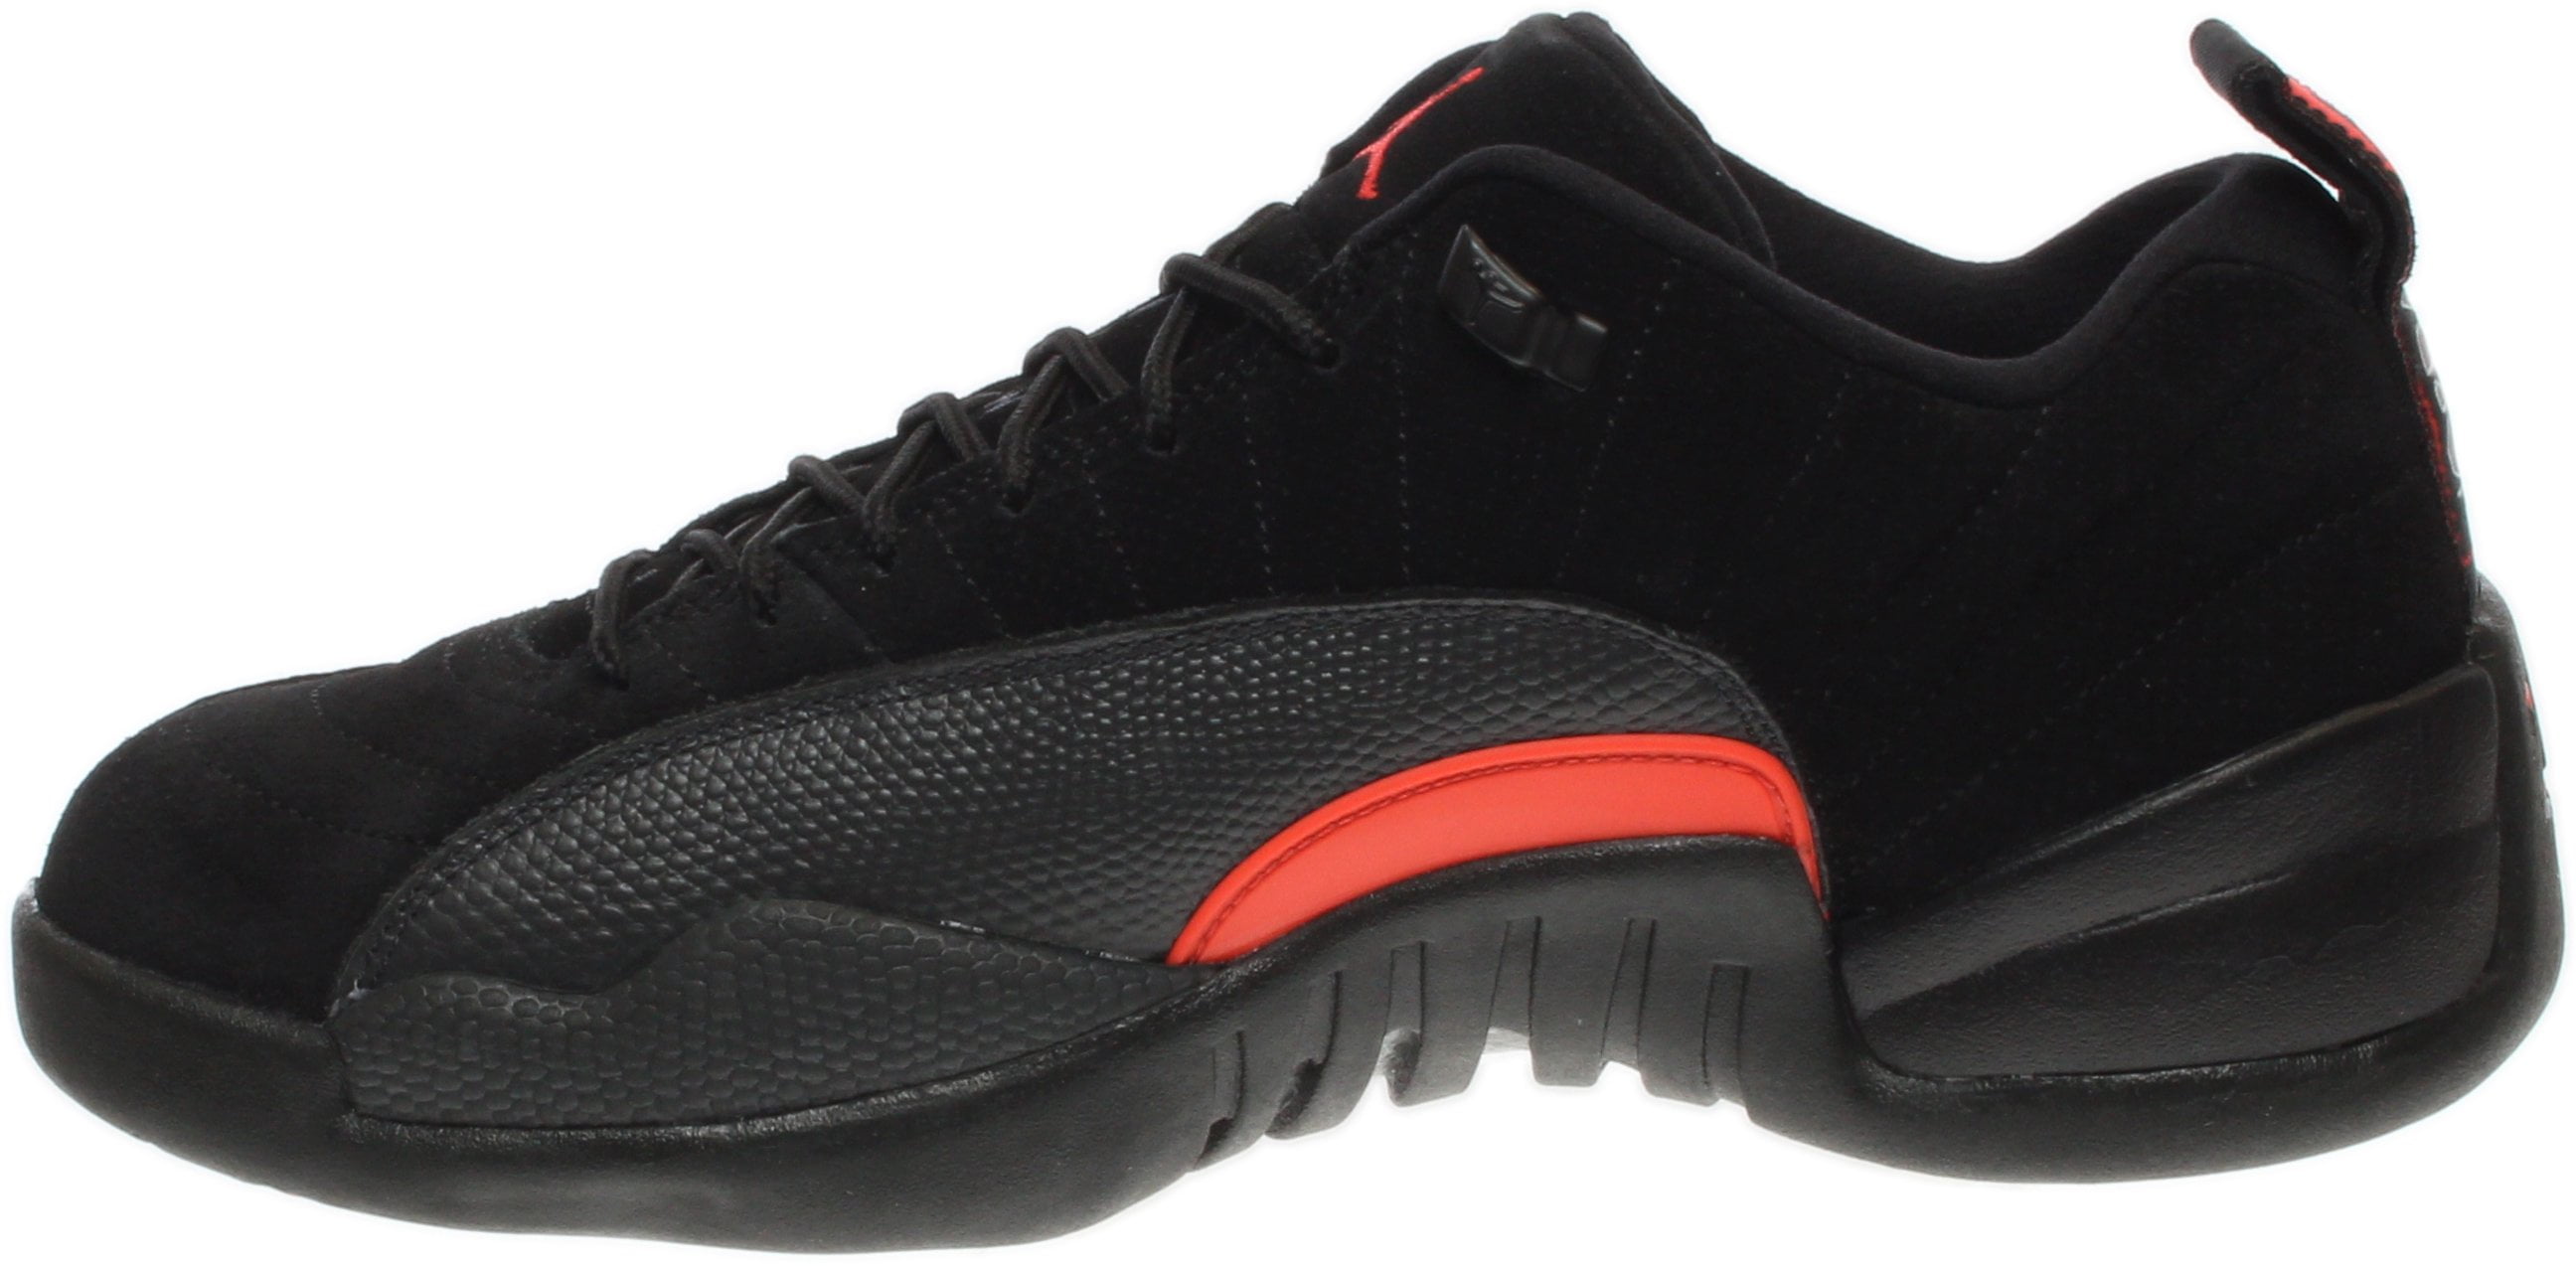 Nike Air Jordan Retro 12 XII Low Max Orange Black Suede Mens 9.5 308317-003  HTF